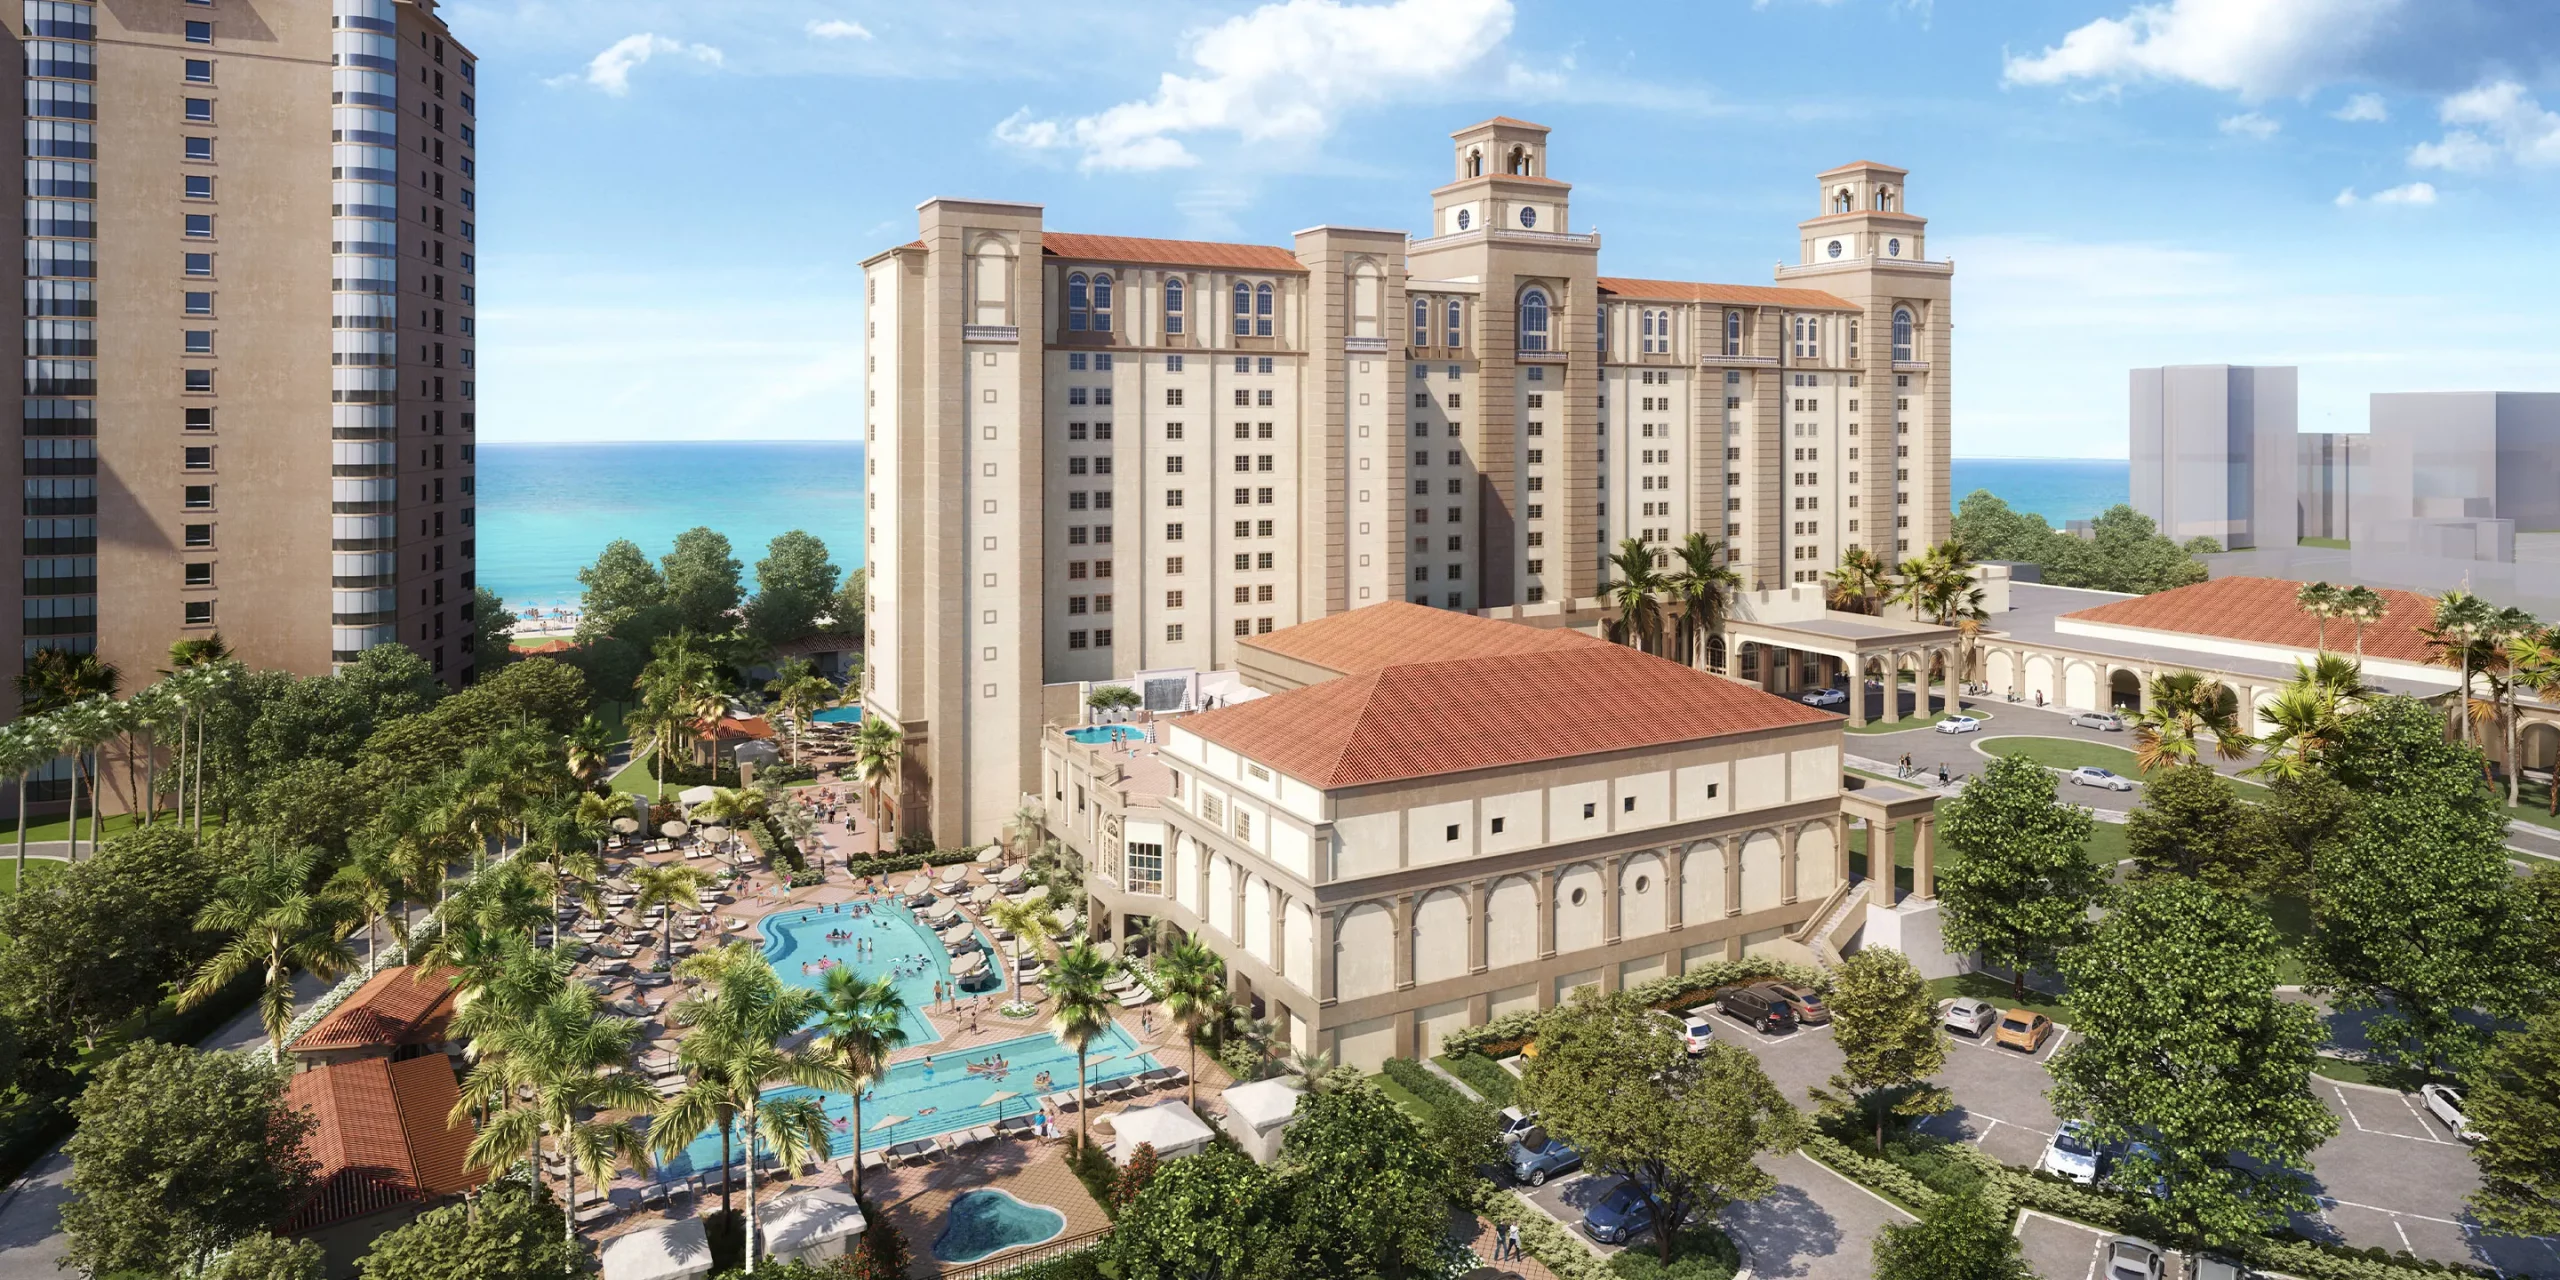 The Ritz-Carlton Naples Beach Resort, Exterior Rendering